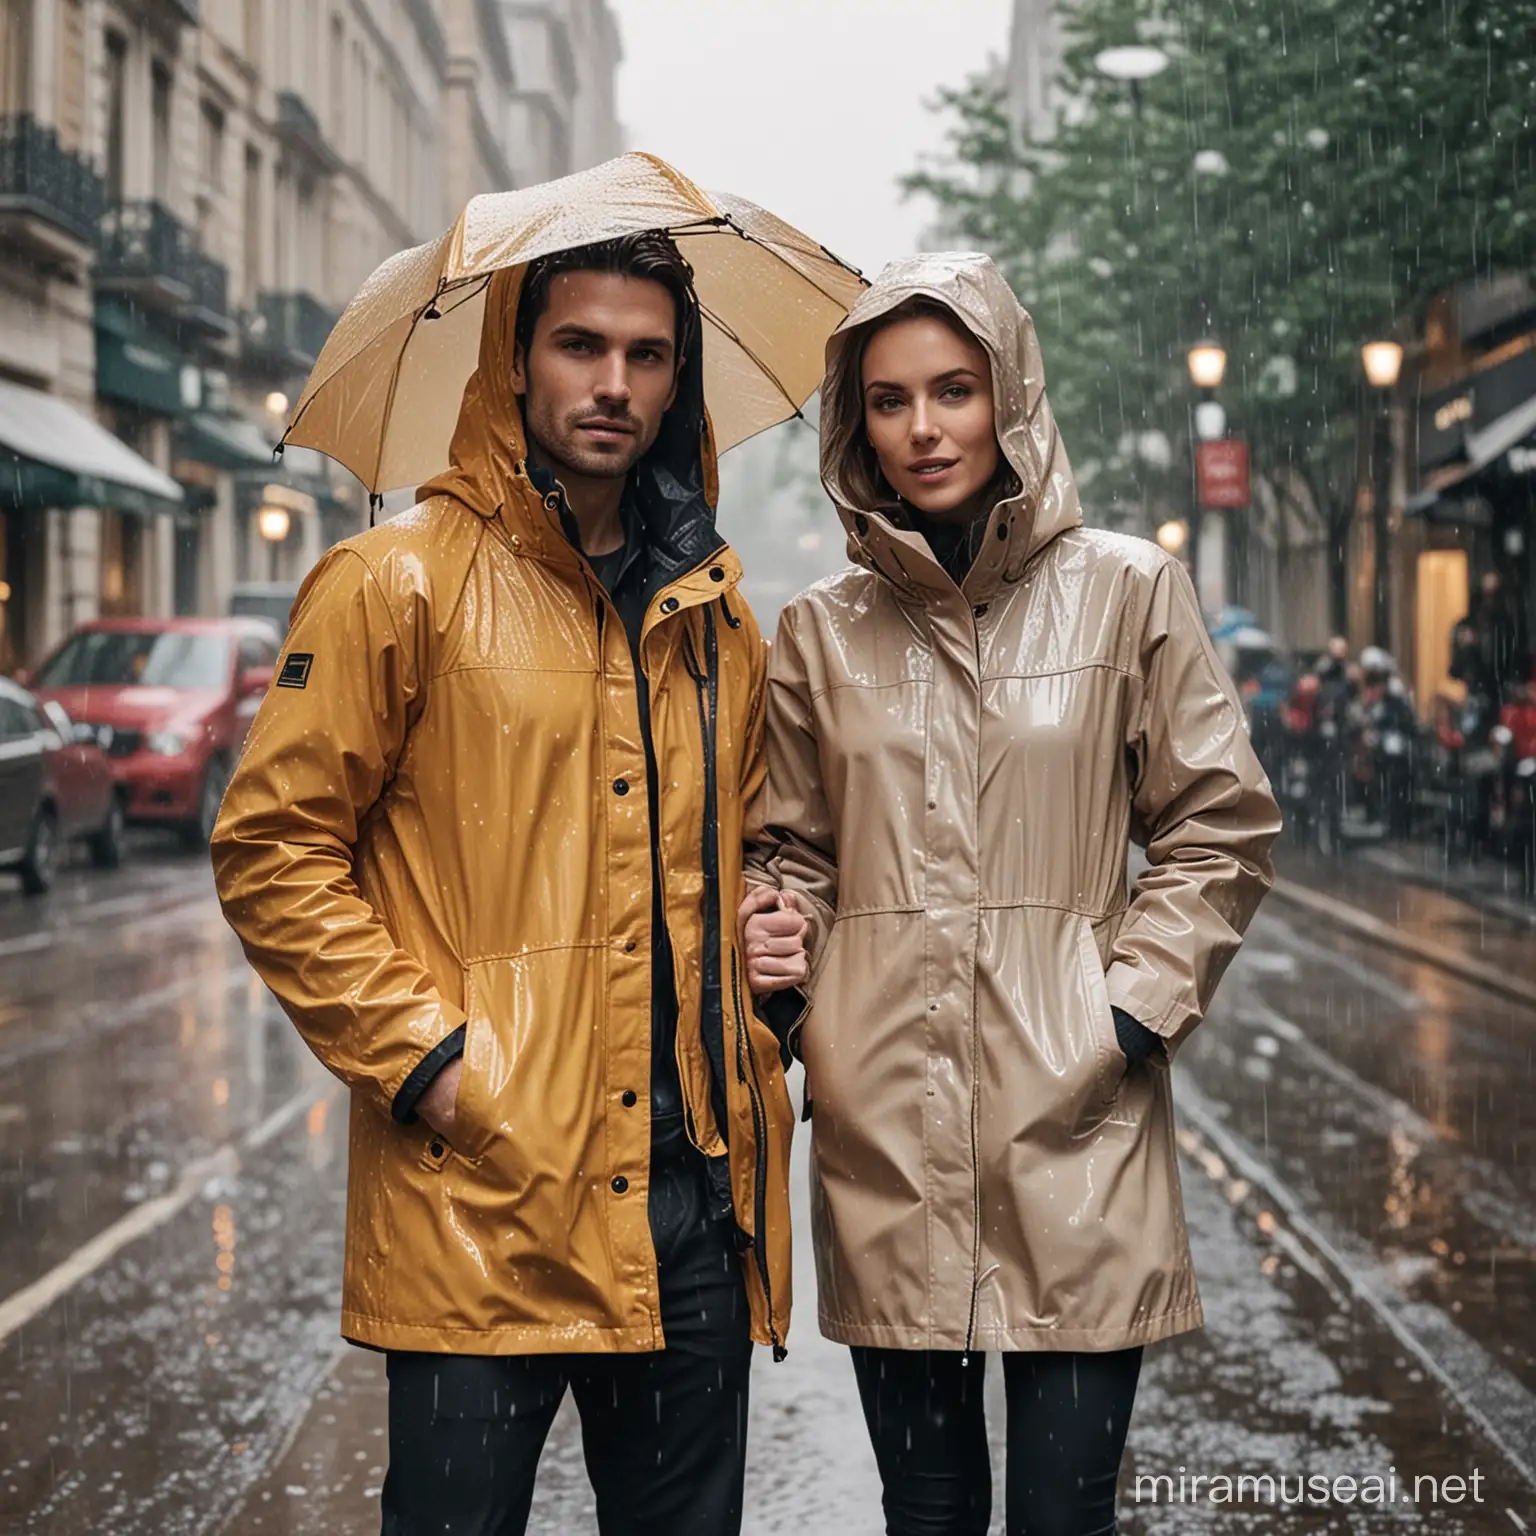 Fashionable Couple in Stylish Rain Jackets on Urban Street